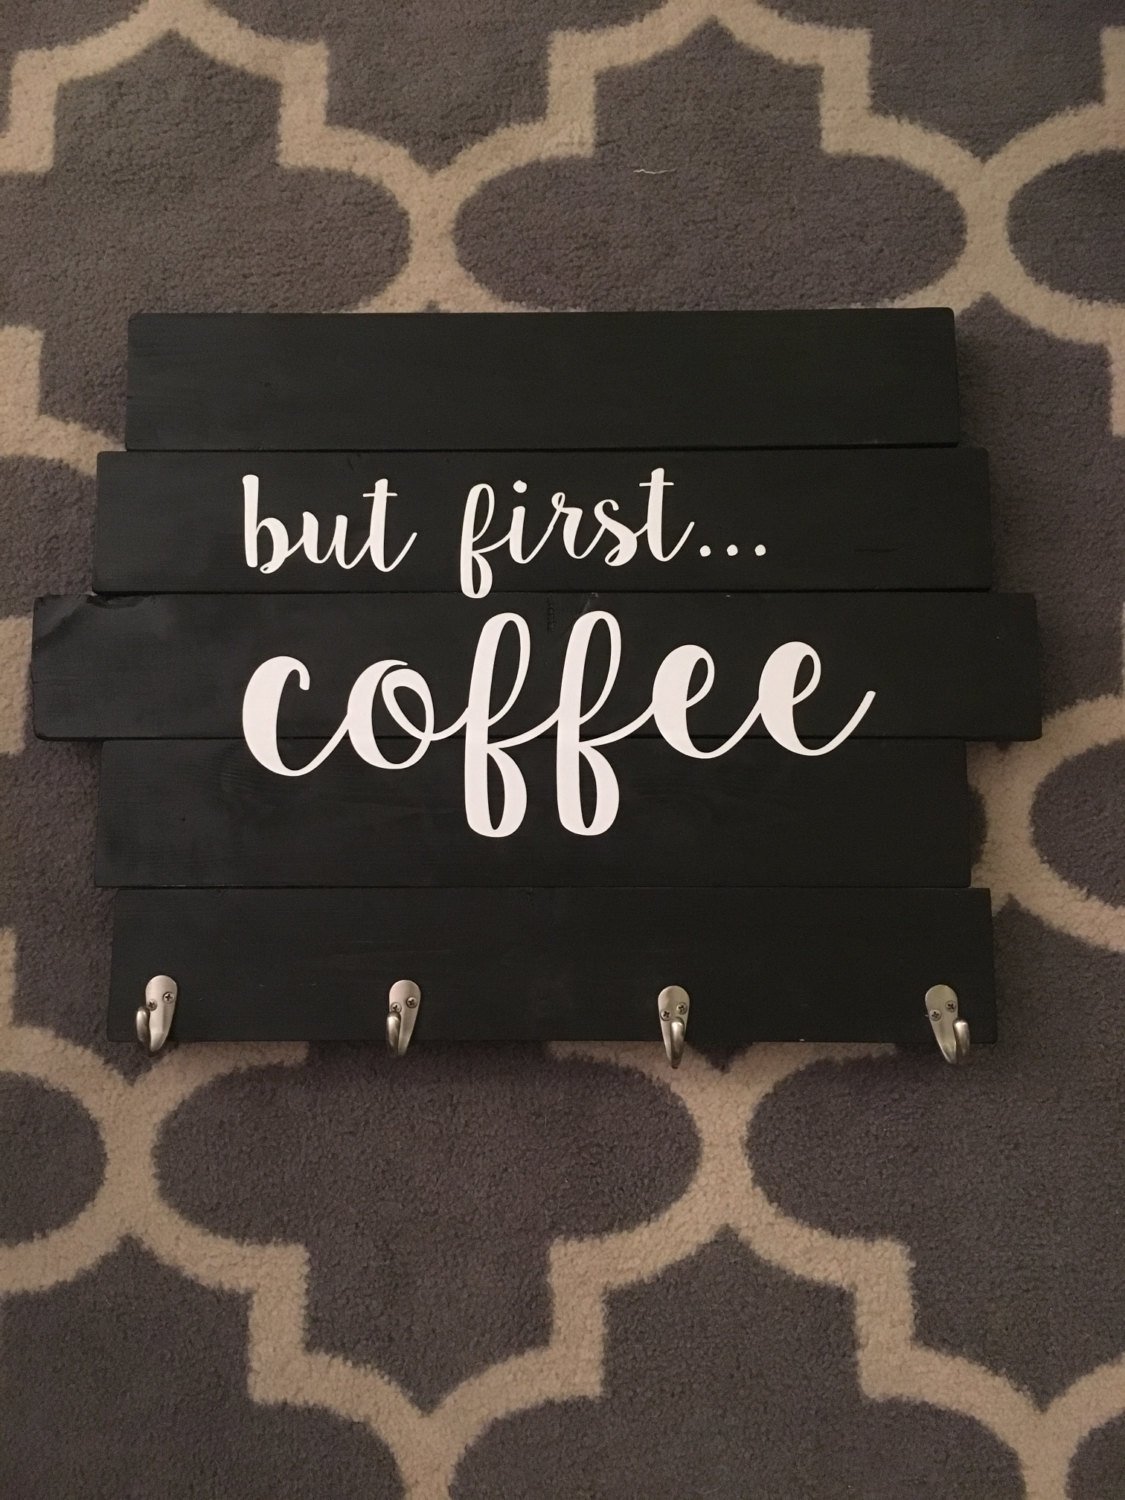 15 Awesome Handmade Coffee Mug Racks For The Coffee Junkies Out There